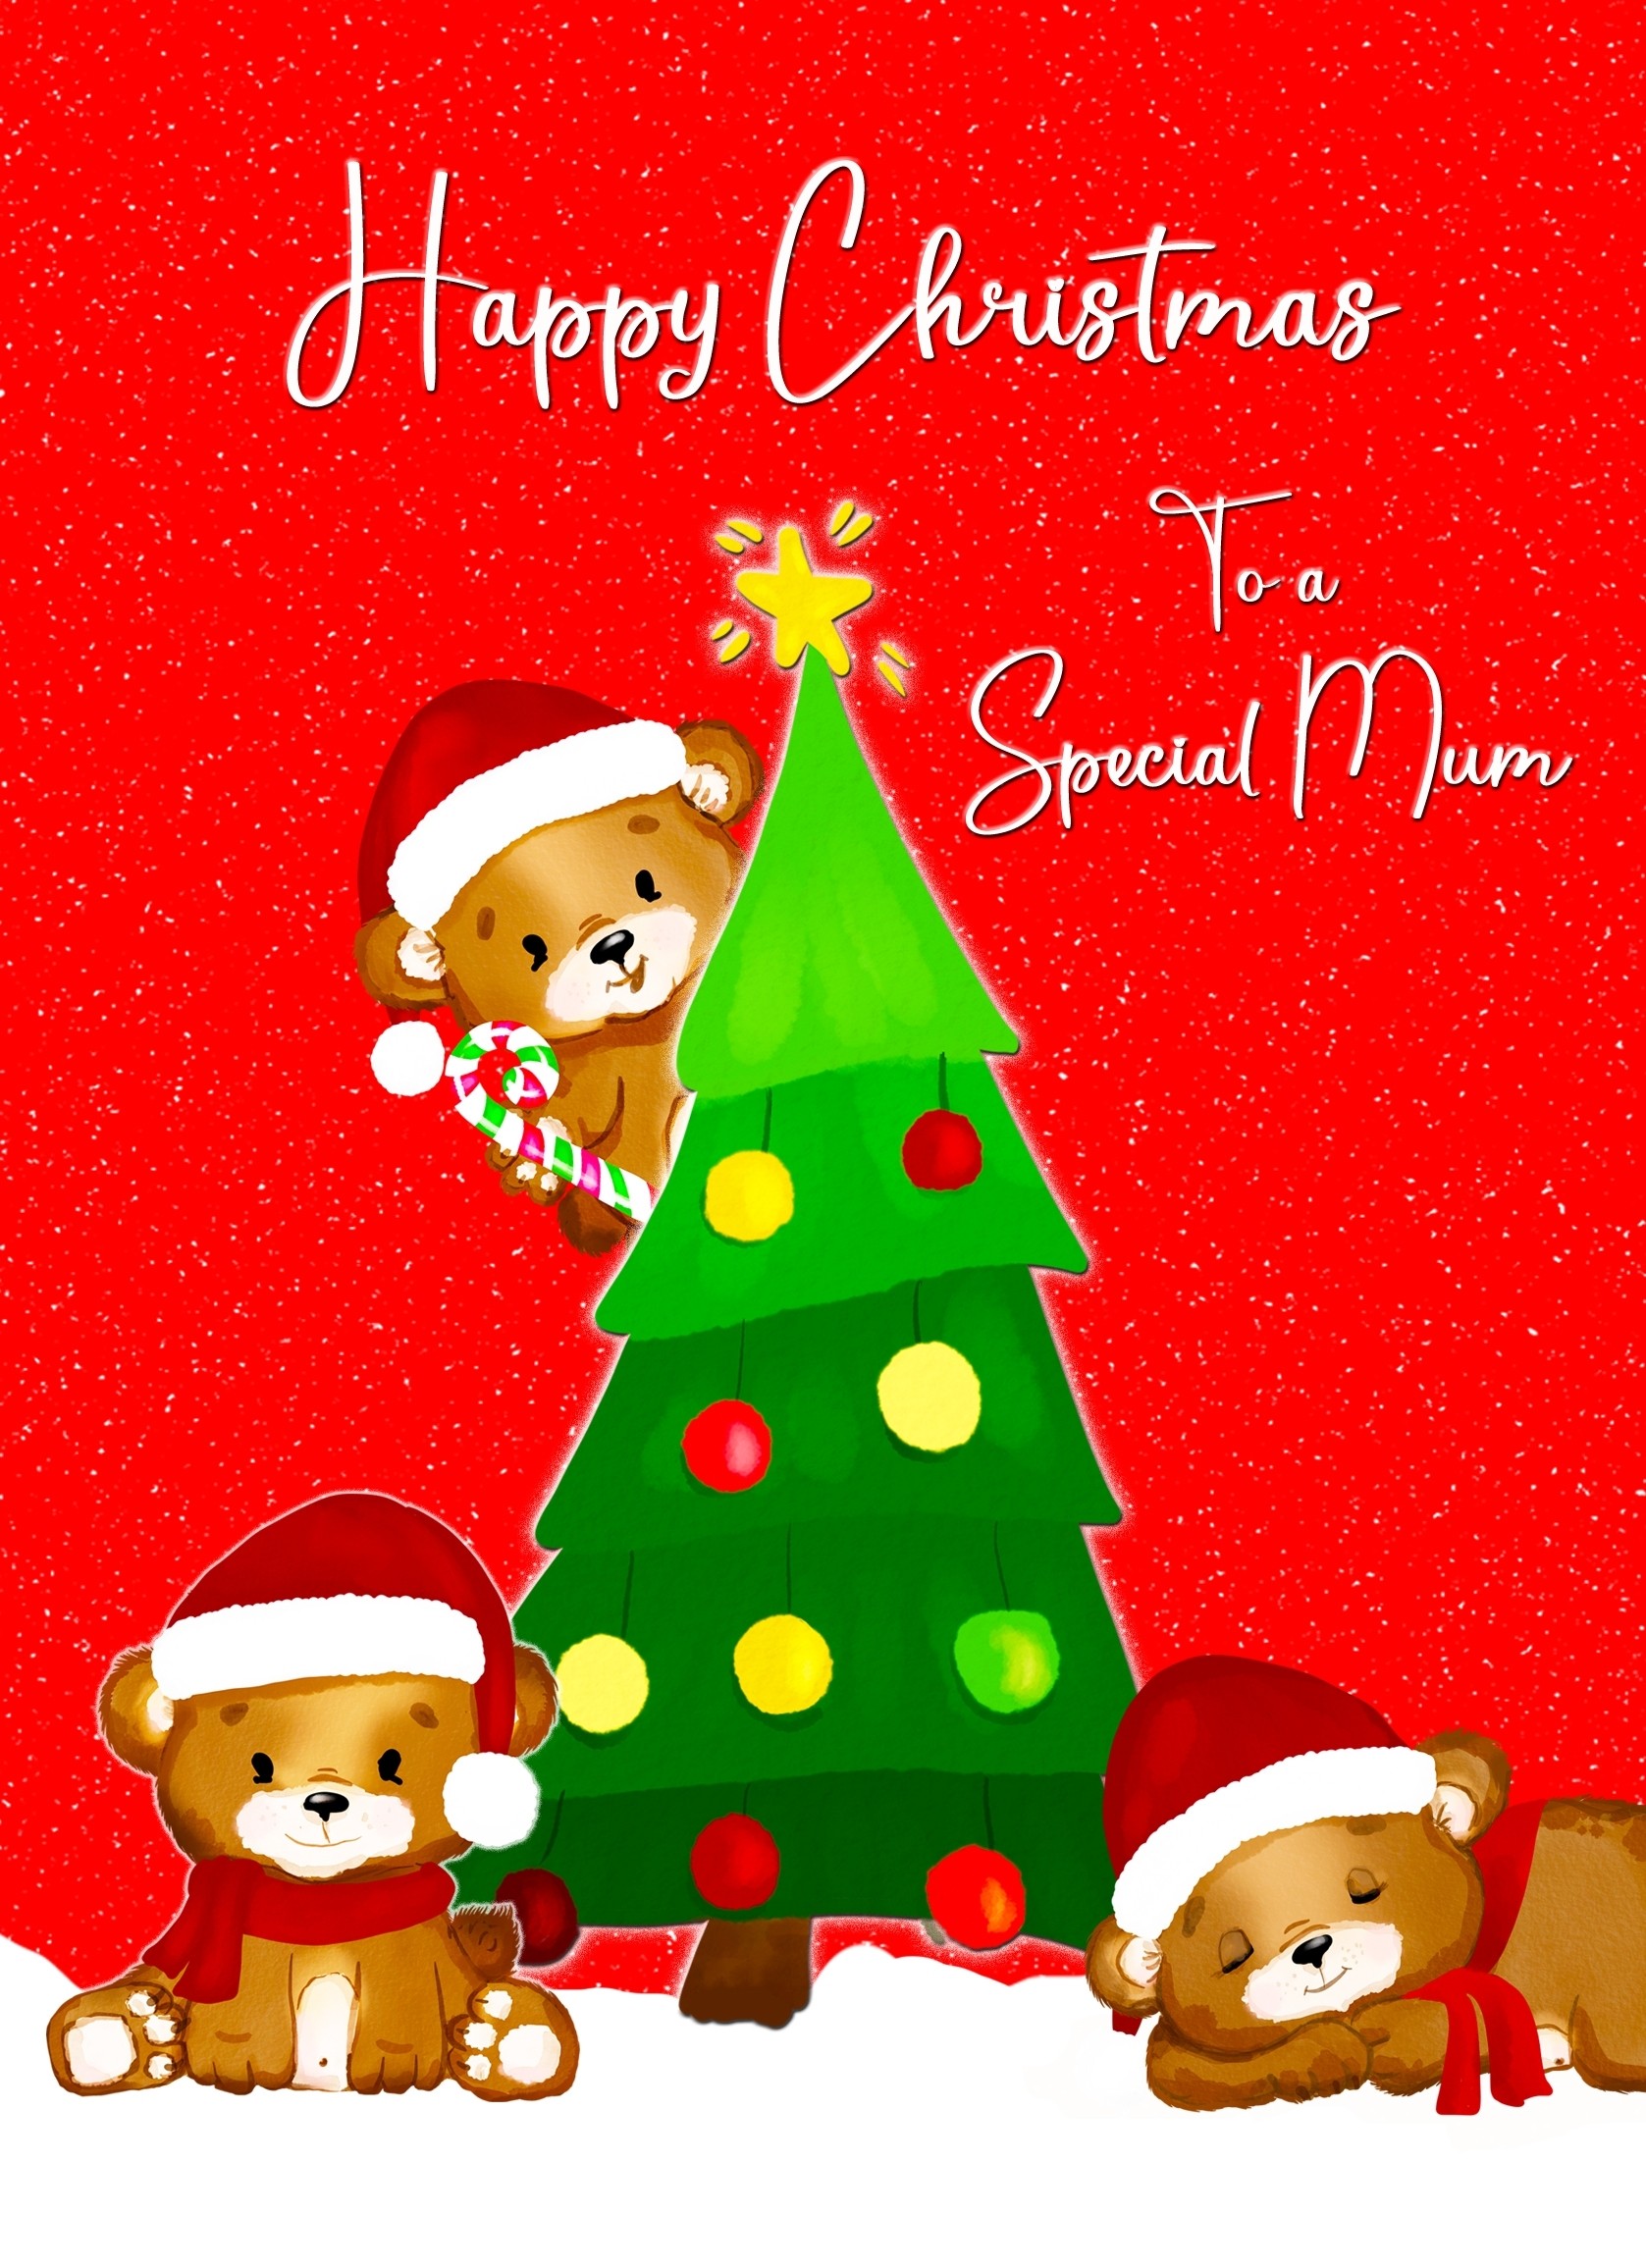 Christmas Card For Mum (Red Christmas Tree)